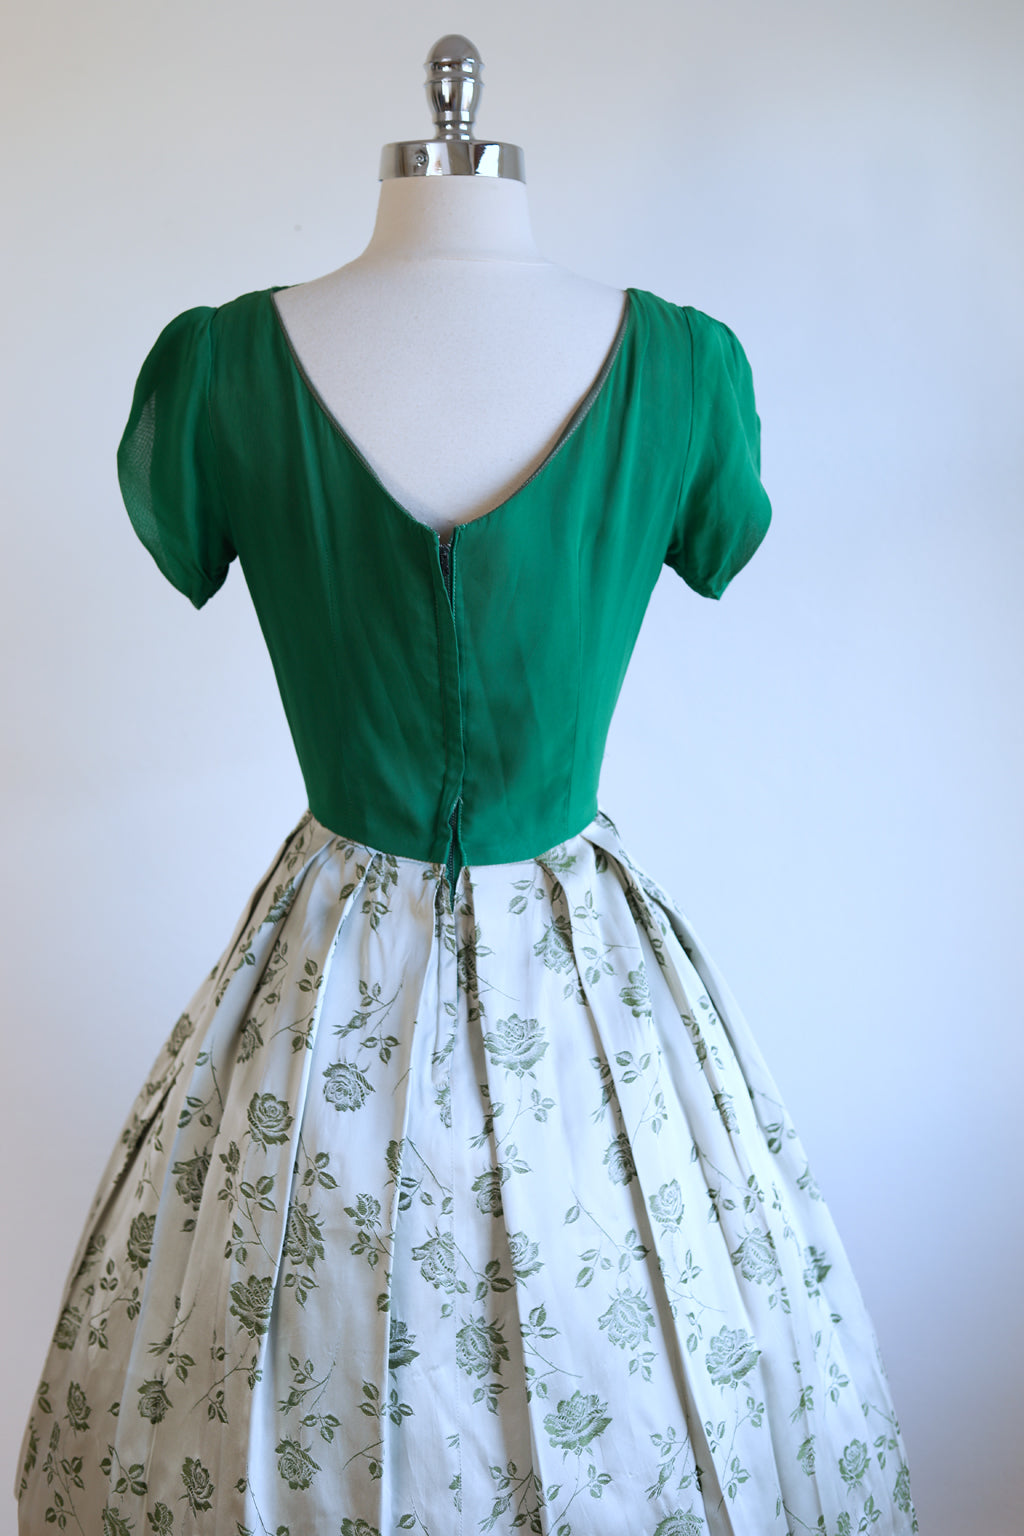 Vintage 1950s Dress - Sublime Irish Green Silk + Satin Rose Brocade Cocktail Party Sundress Size S